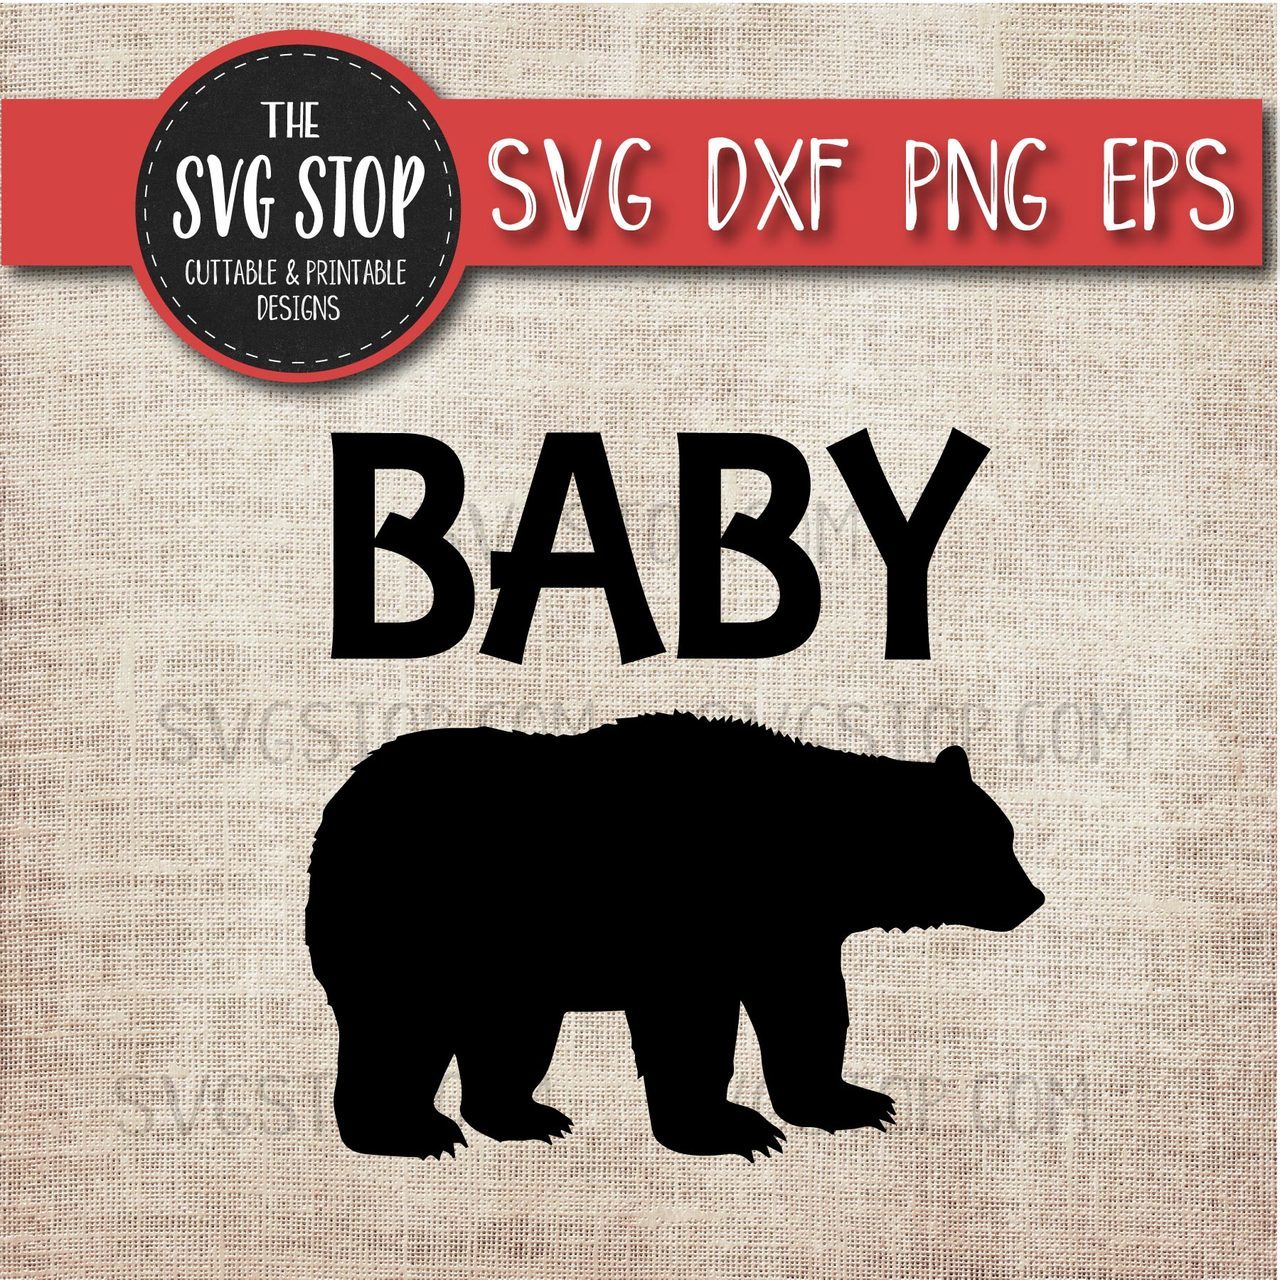 Baby bear svg.